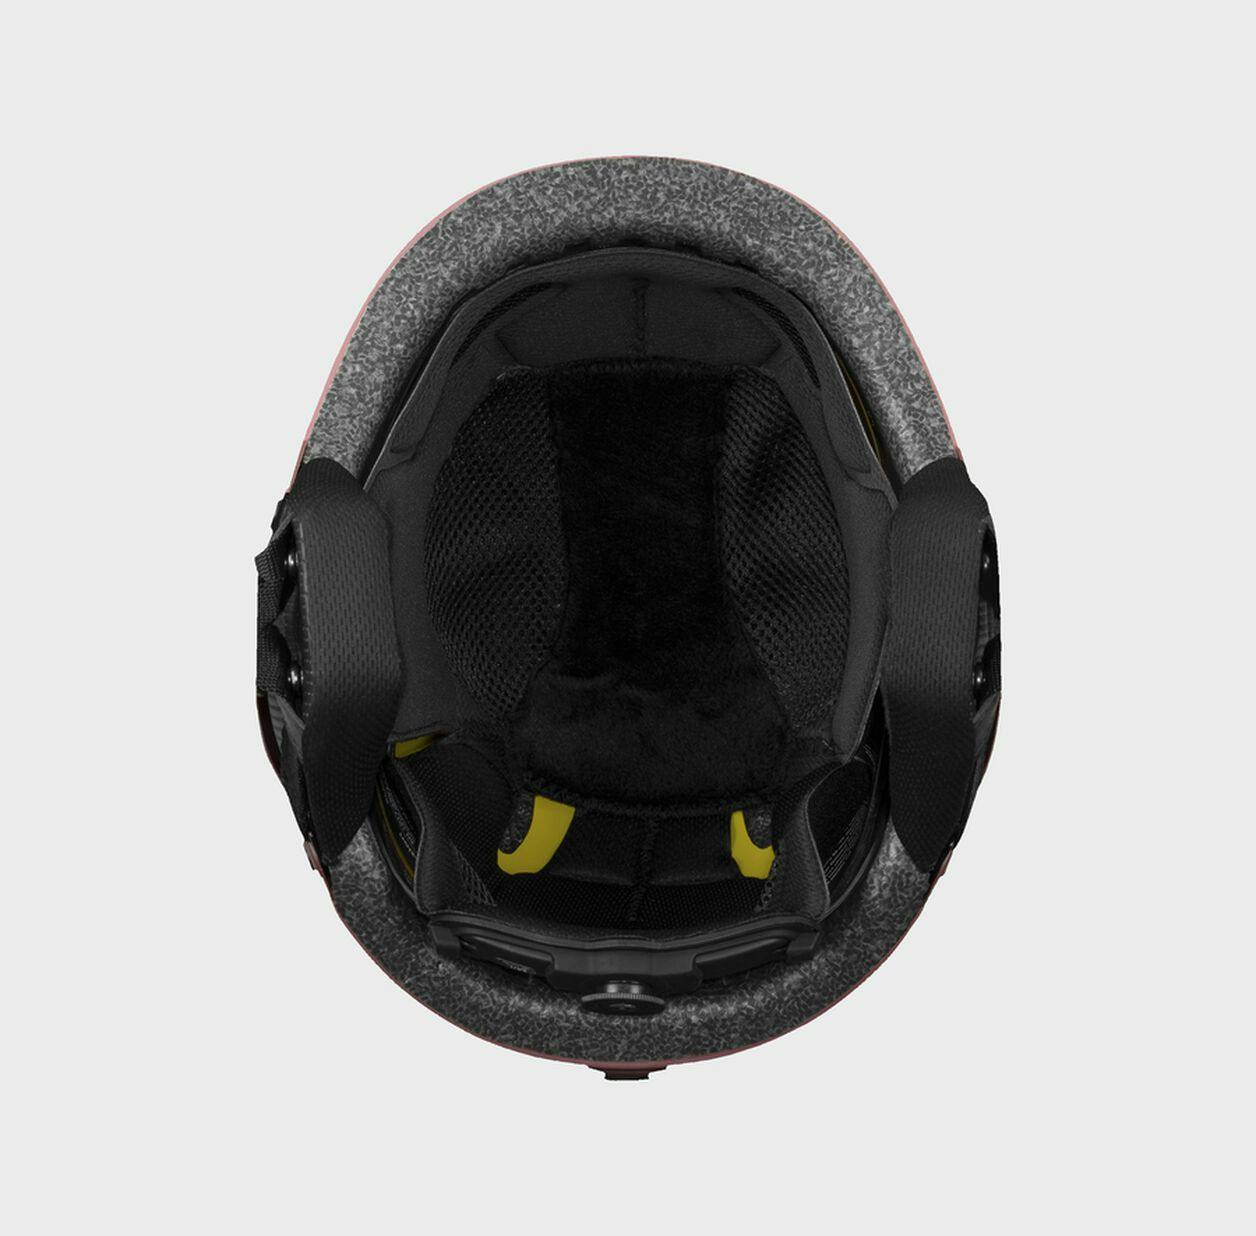 Sweet Protection Blaster II MIPS Helmet